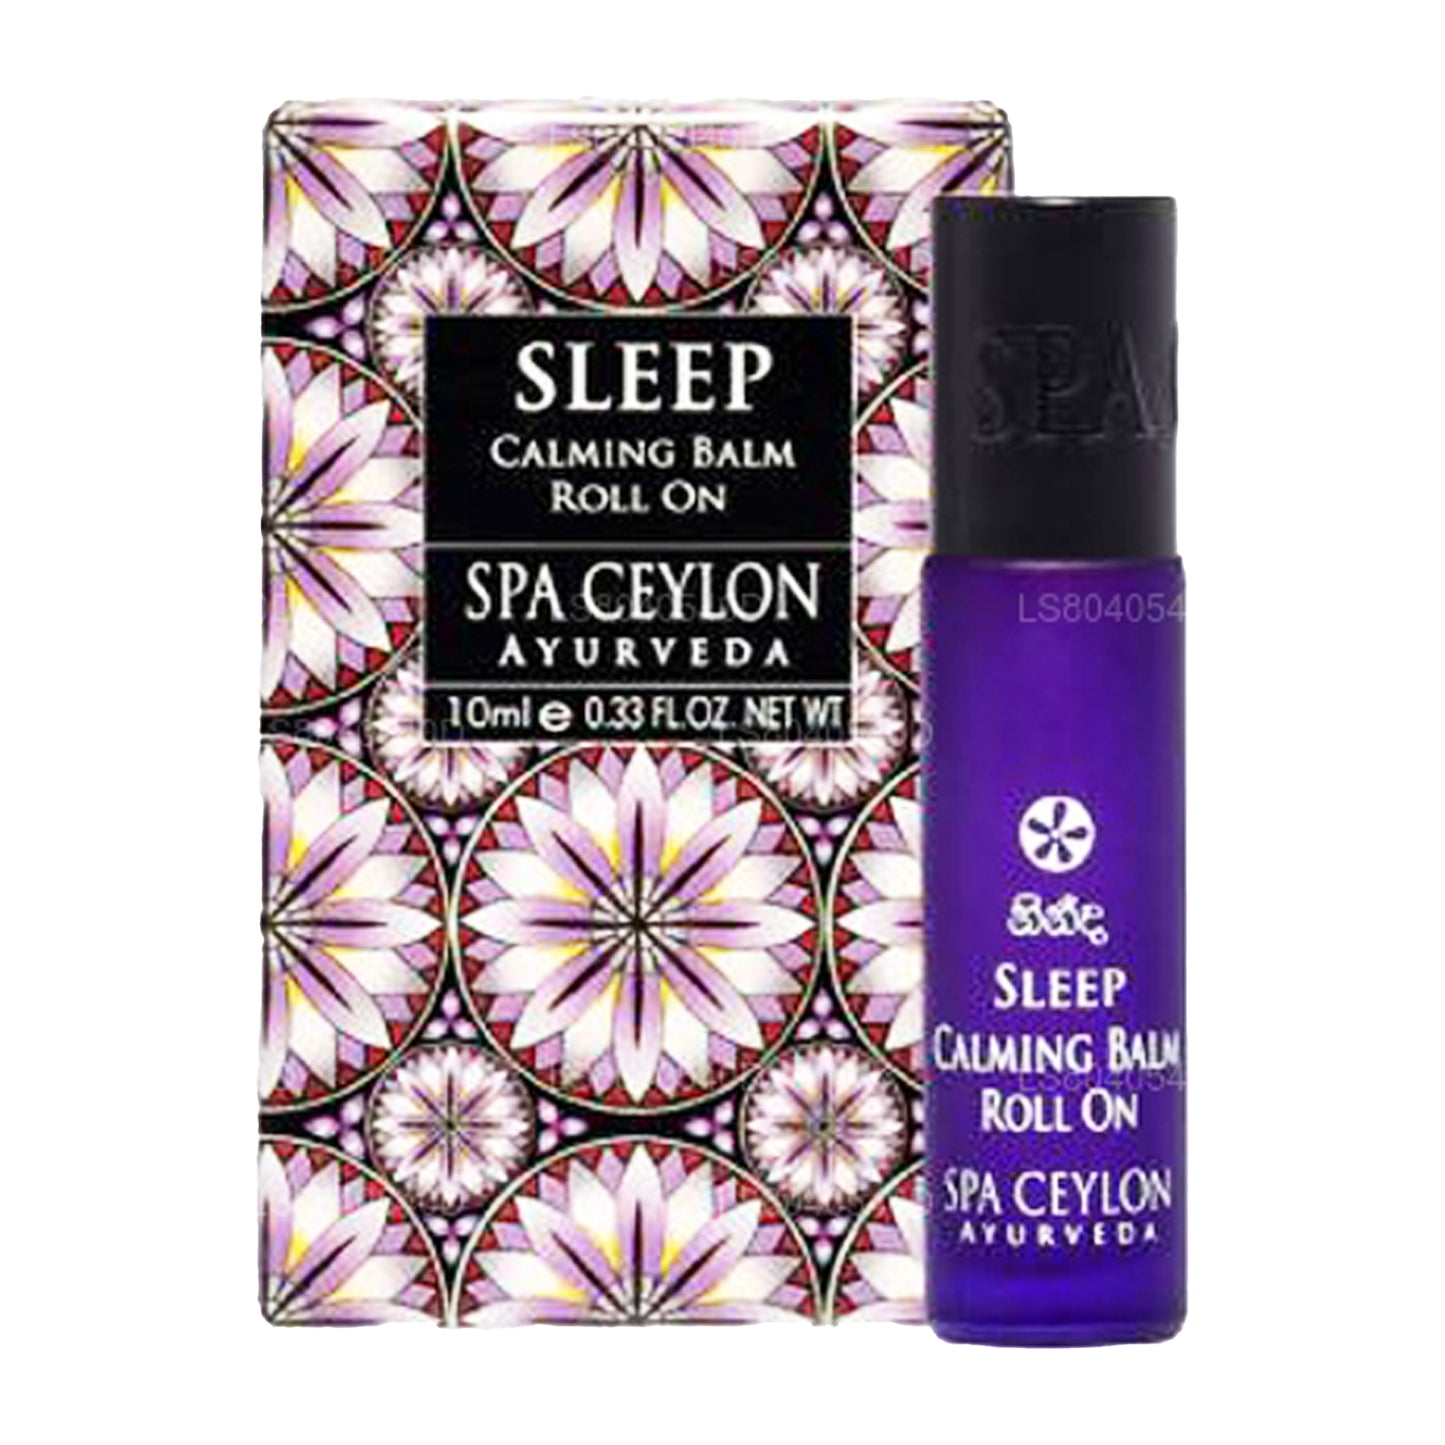 Spa Ceylon Sleep Beroligende Balm Roll On (10 ml)